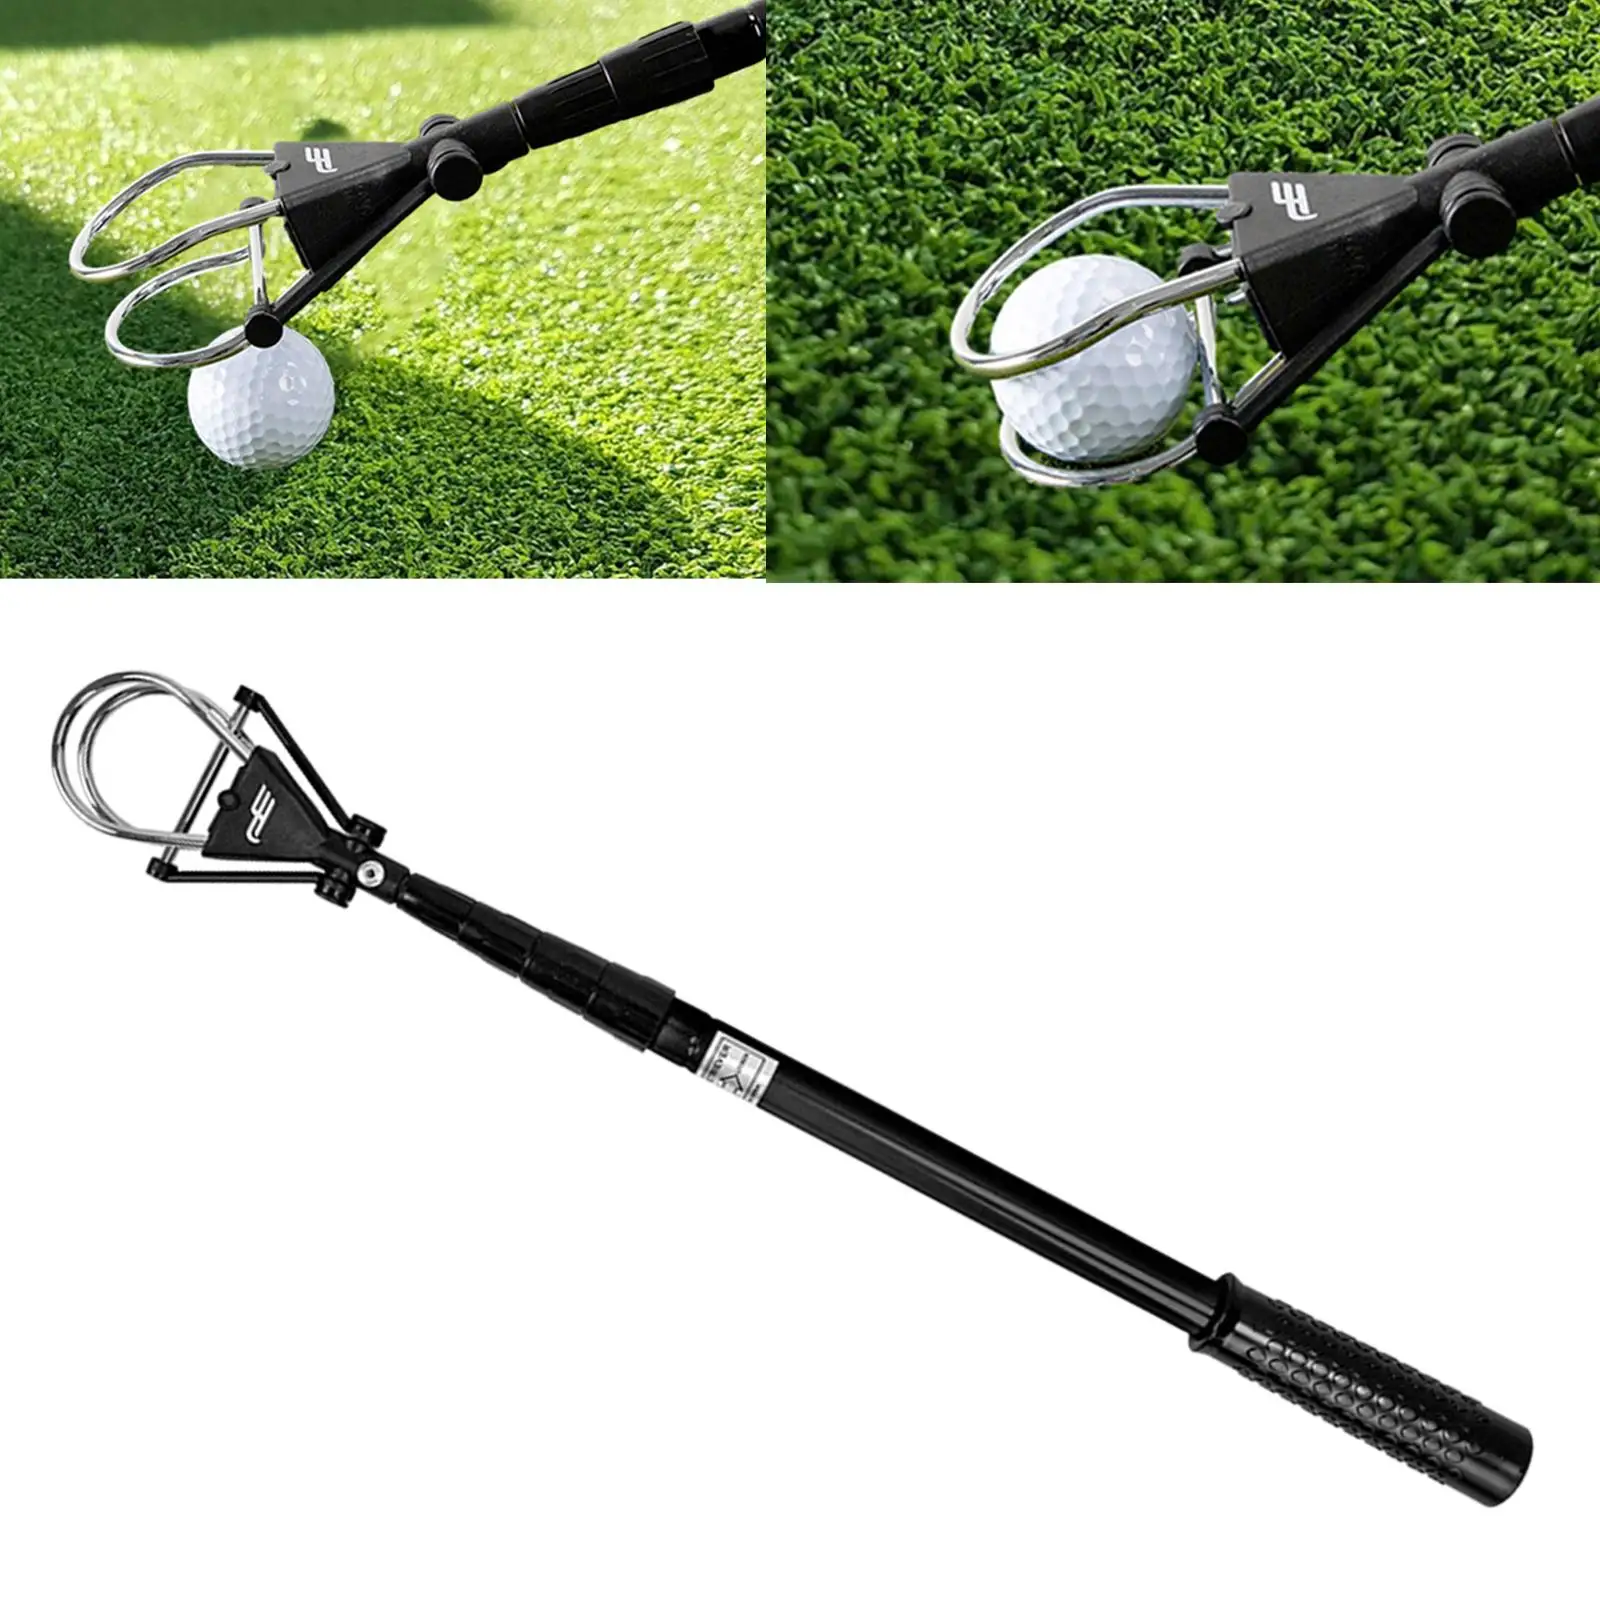 Golf Ball Retriever Portable Extendable Easy Pickup Ball Retriever Tool